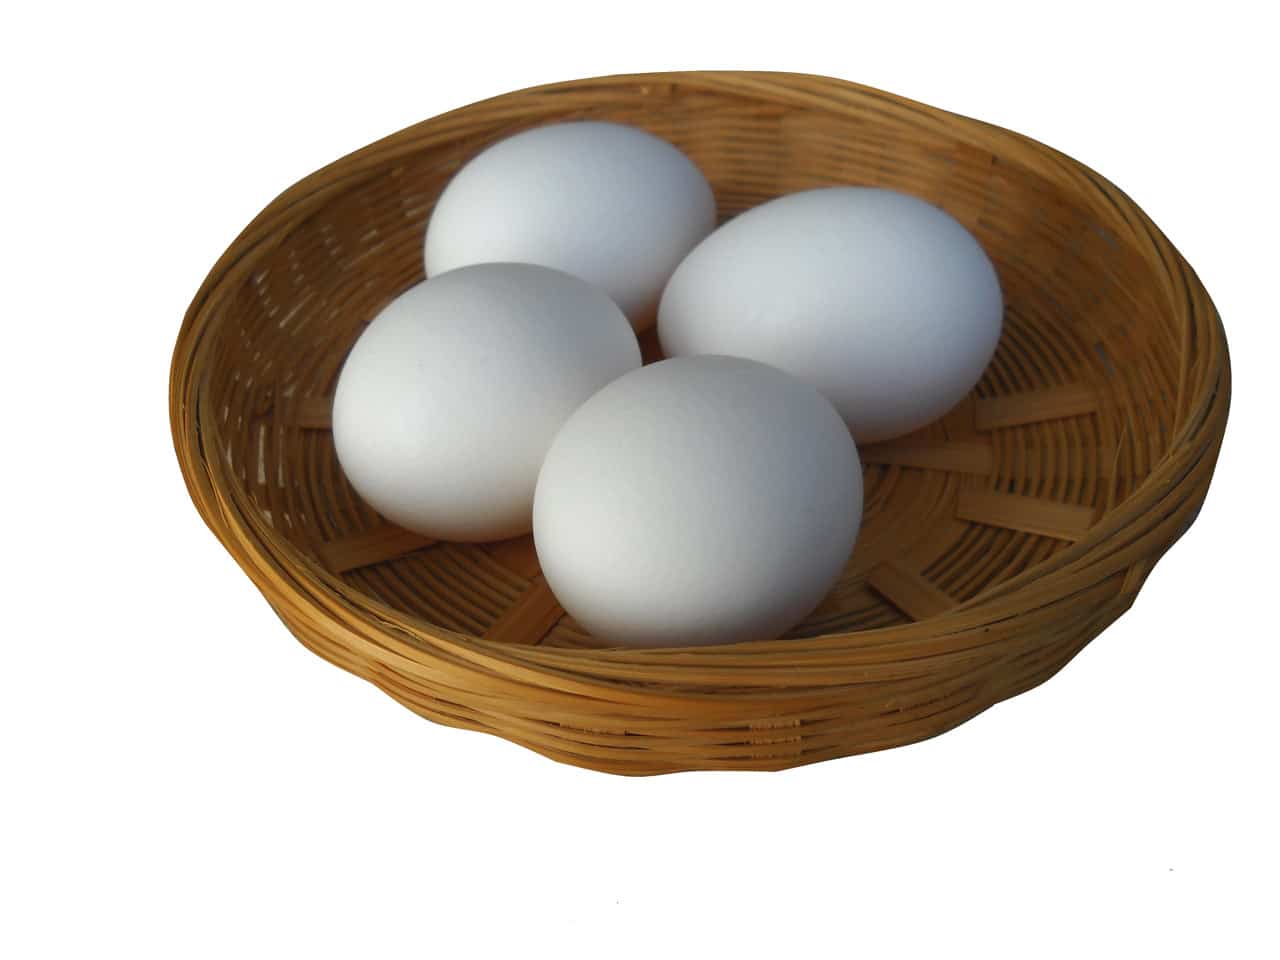 eggs-in-a-basket